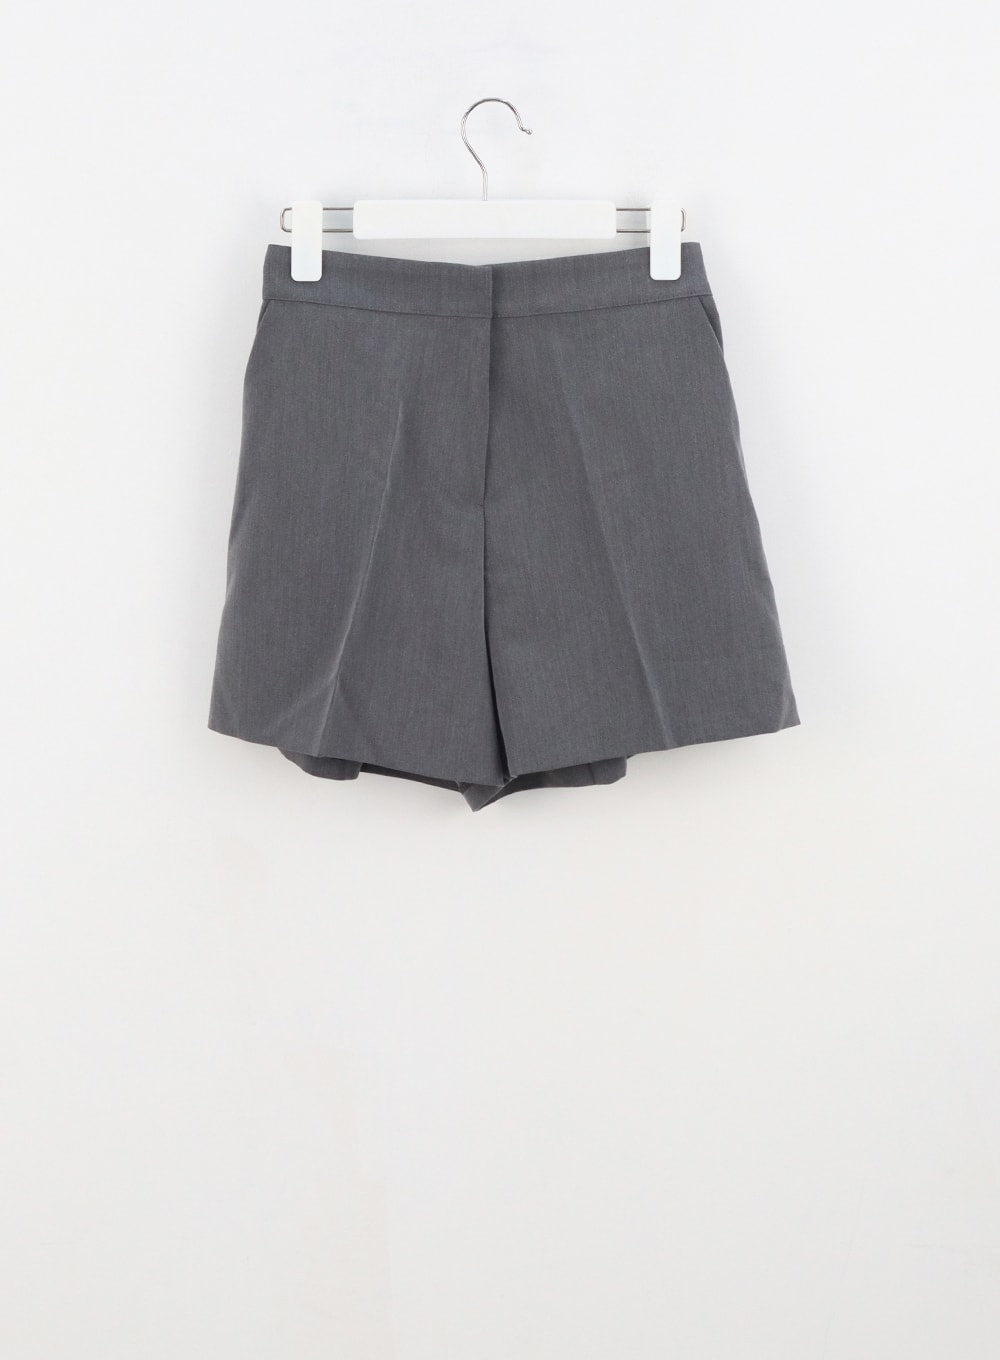 Shorts And Vest Set OA320